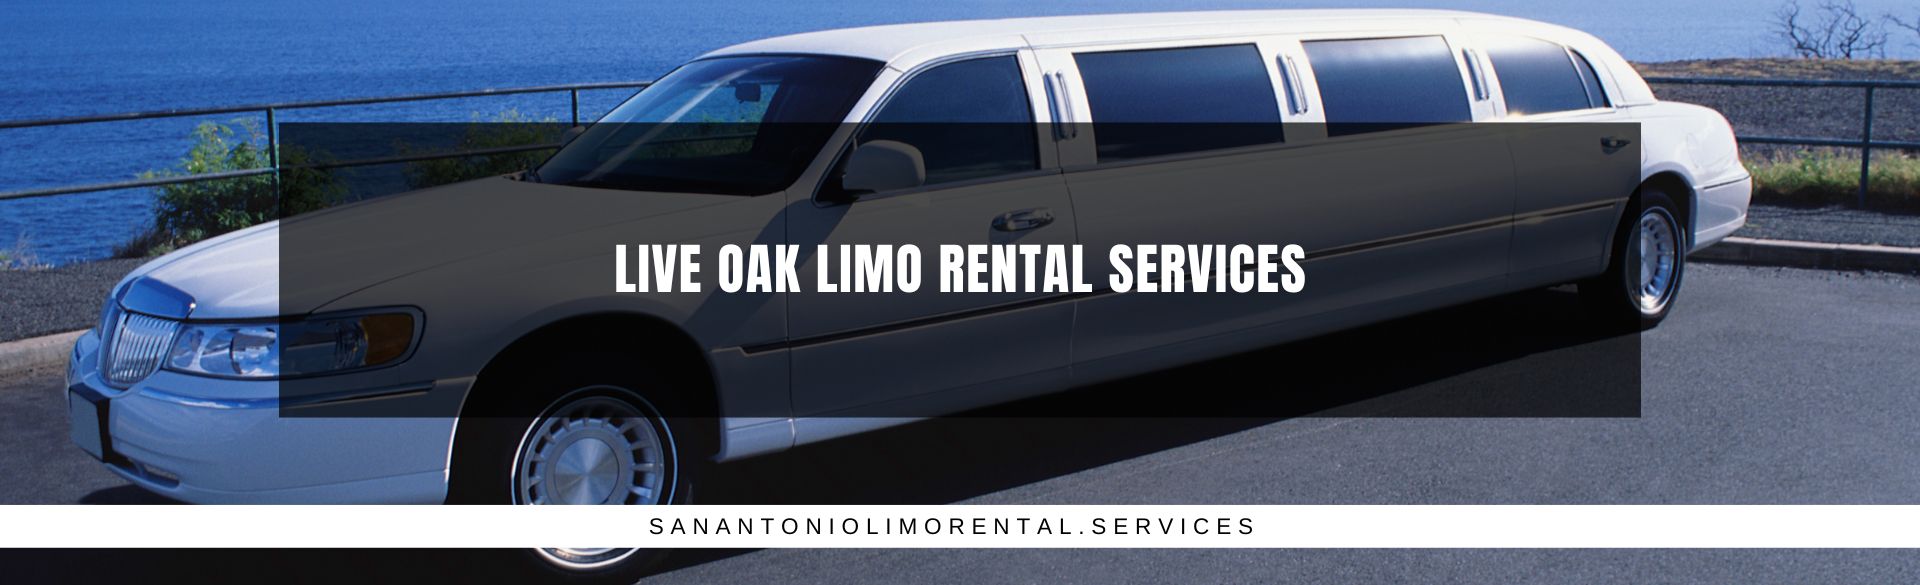 Live Oak Limo Rental Services